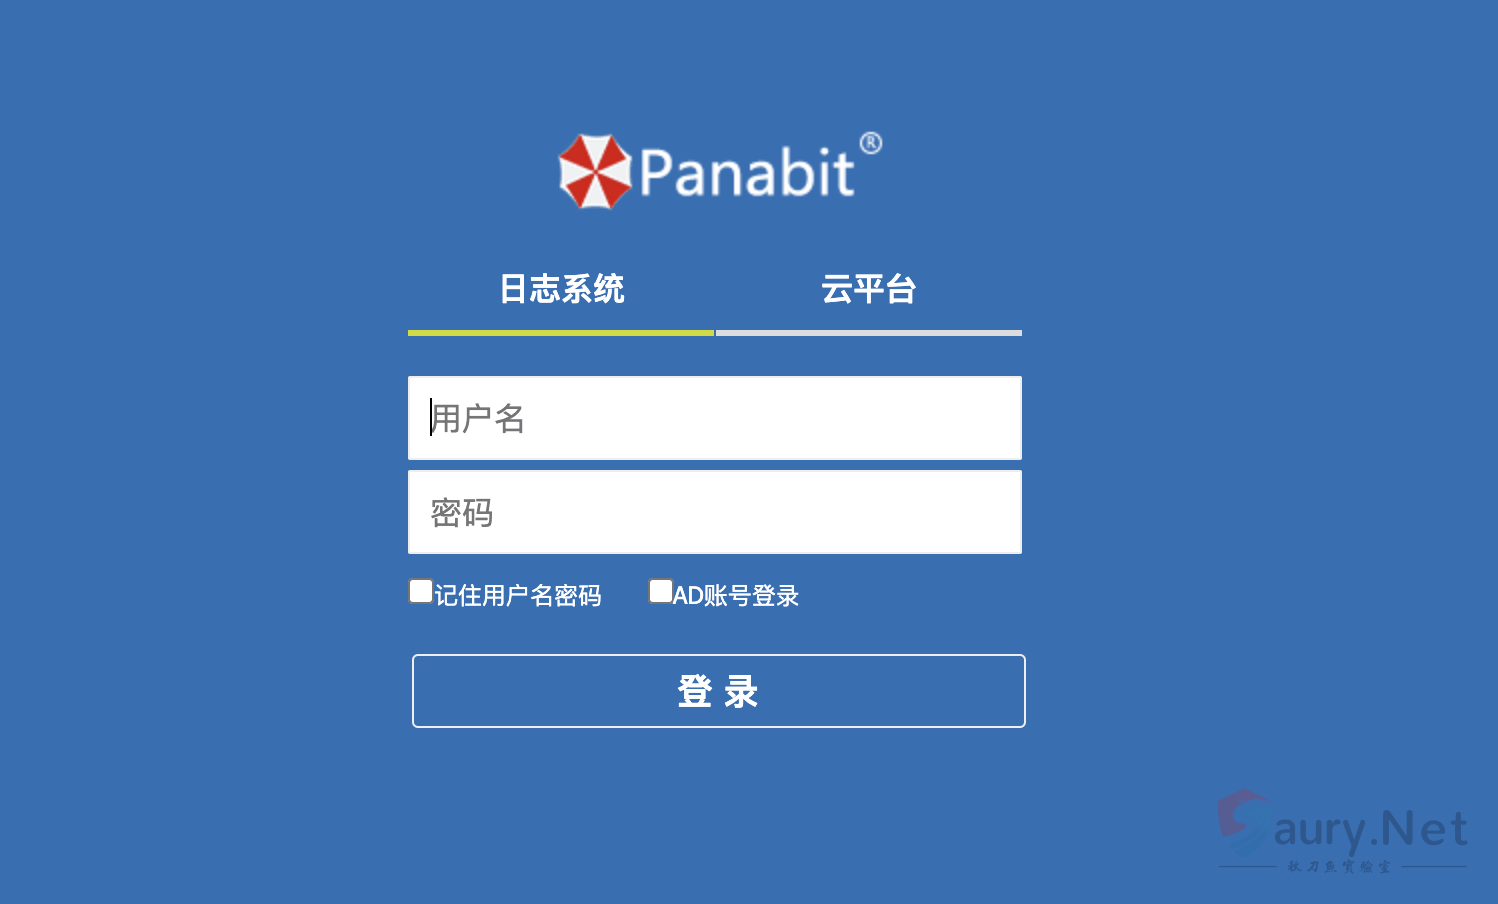 Panabit Panalog sy_addmount.php 远程命令执行漏洞-秋刀鱼实验室